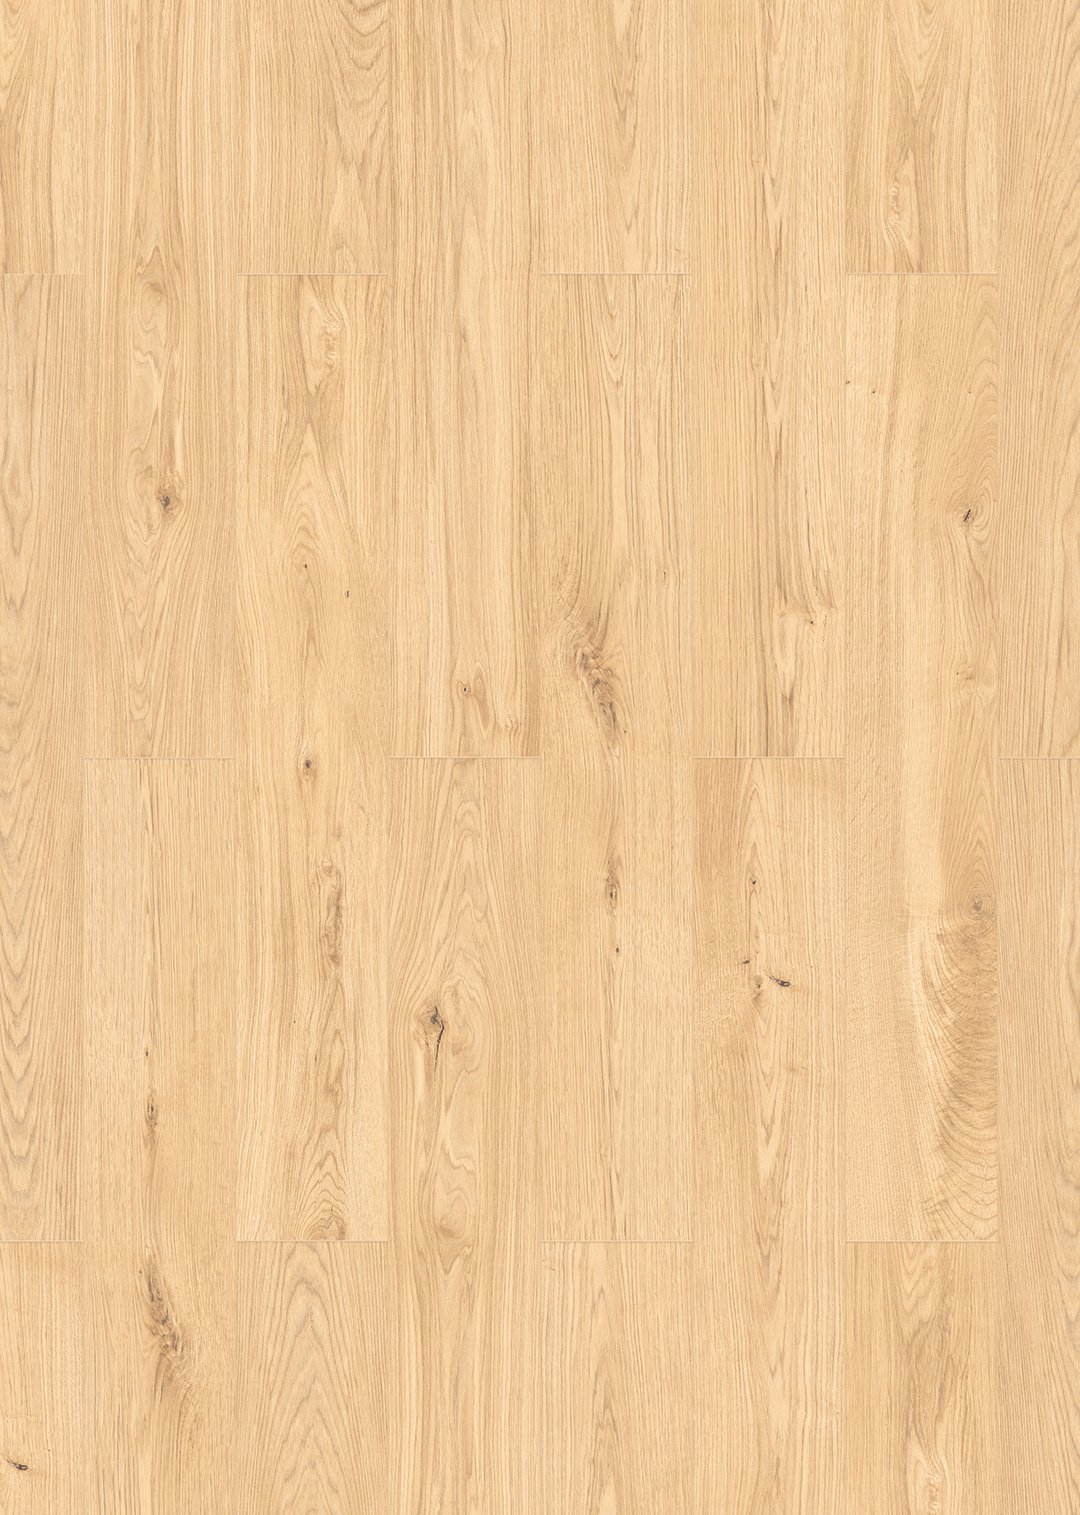 SPC vinilinės grindys GREEN VINYL 56944, Karpatų ąžuolo spalvos, 1290 x 203 x 4 mm, 32/AC4